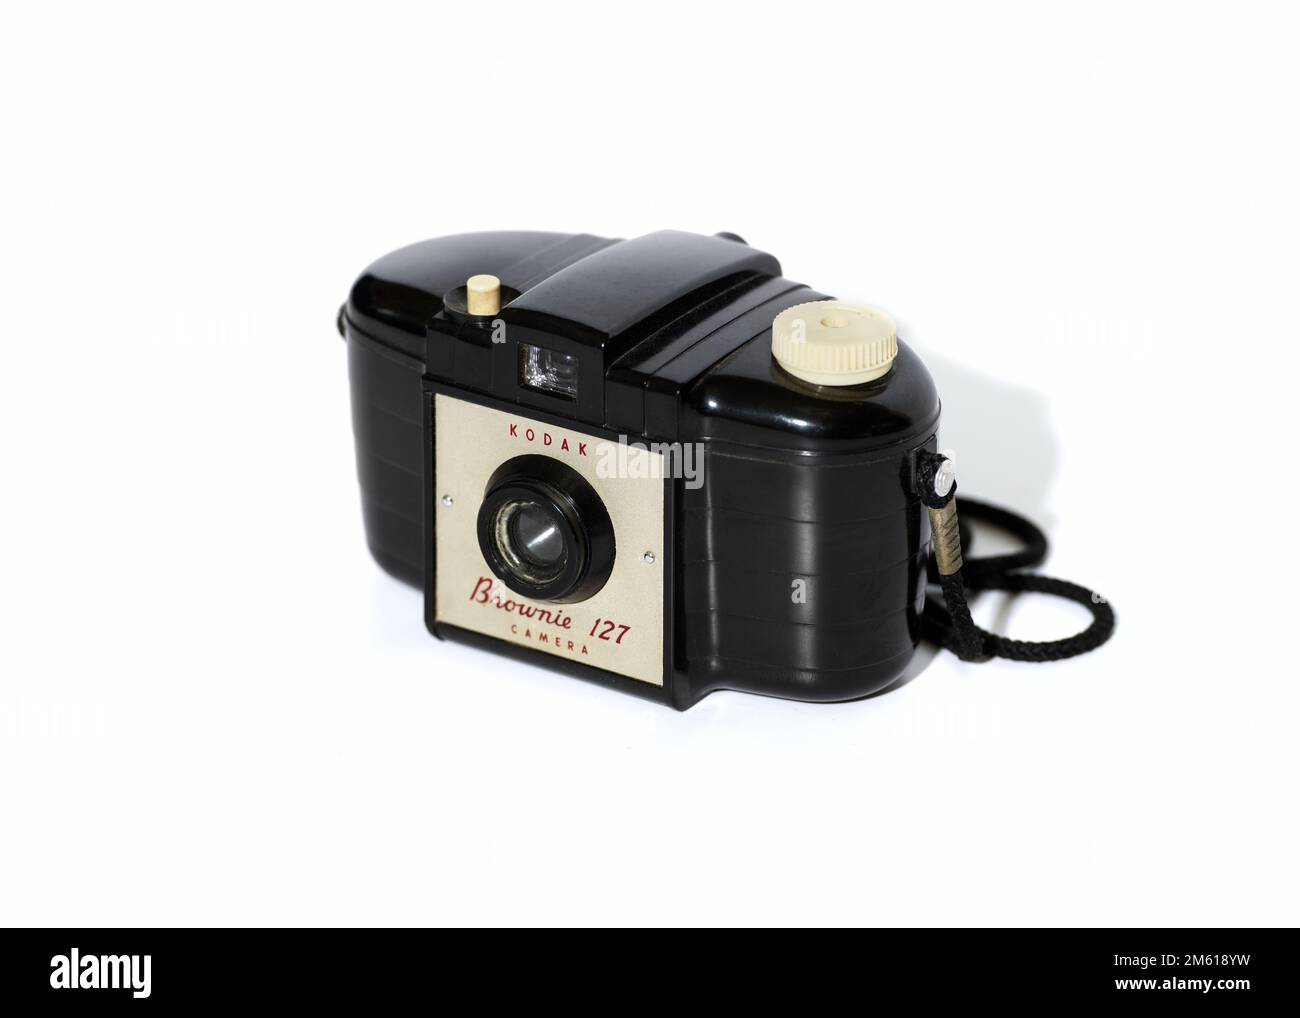 Fotocamera Kodak Brownie 127 su sfondo bianco Foto Stock